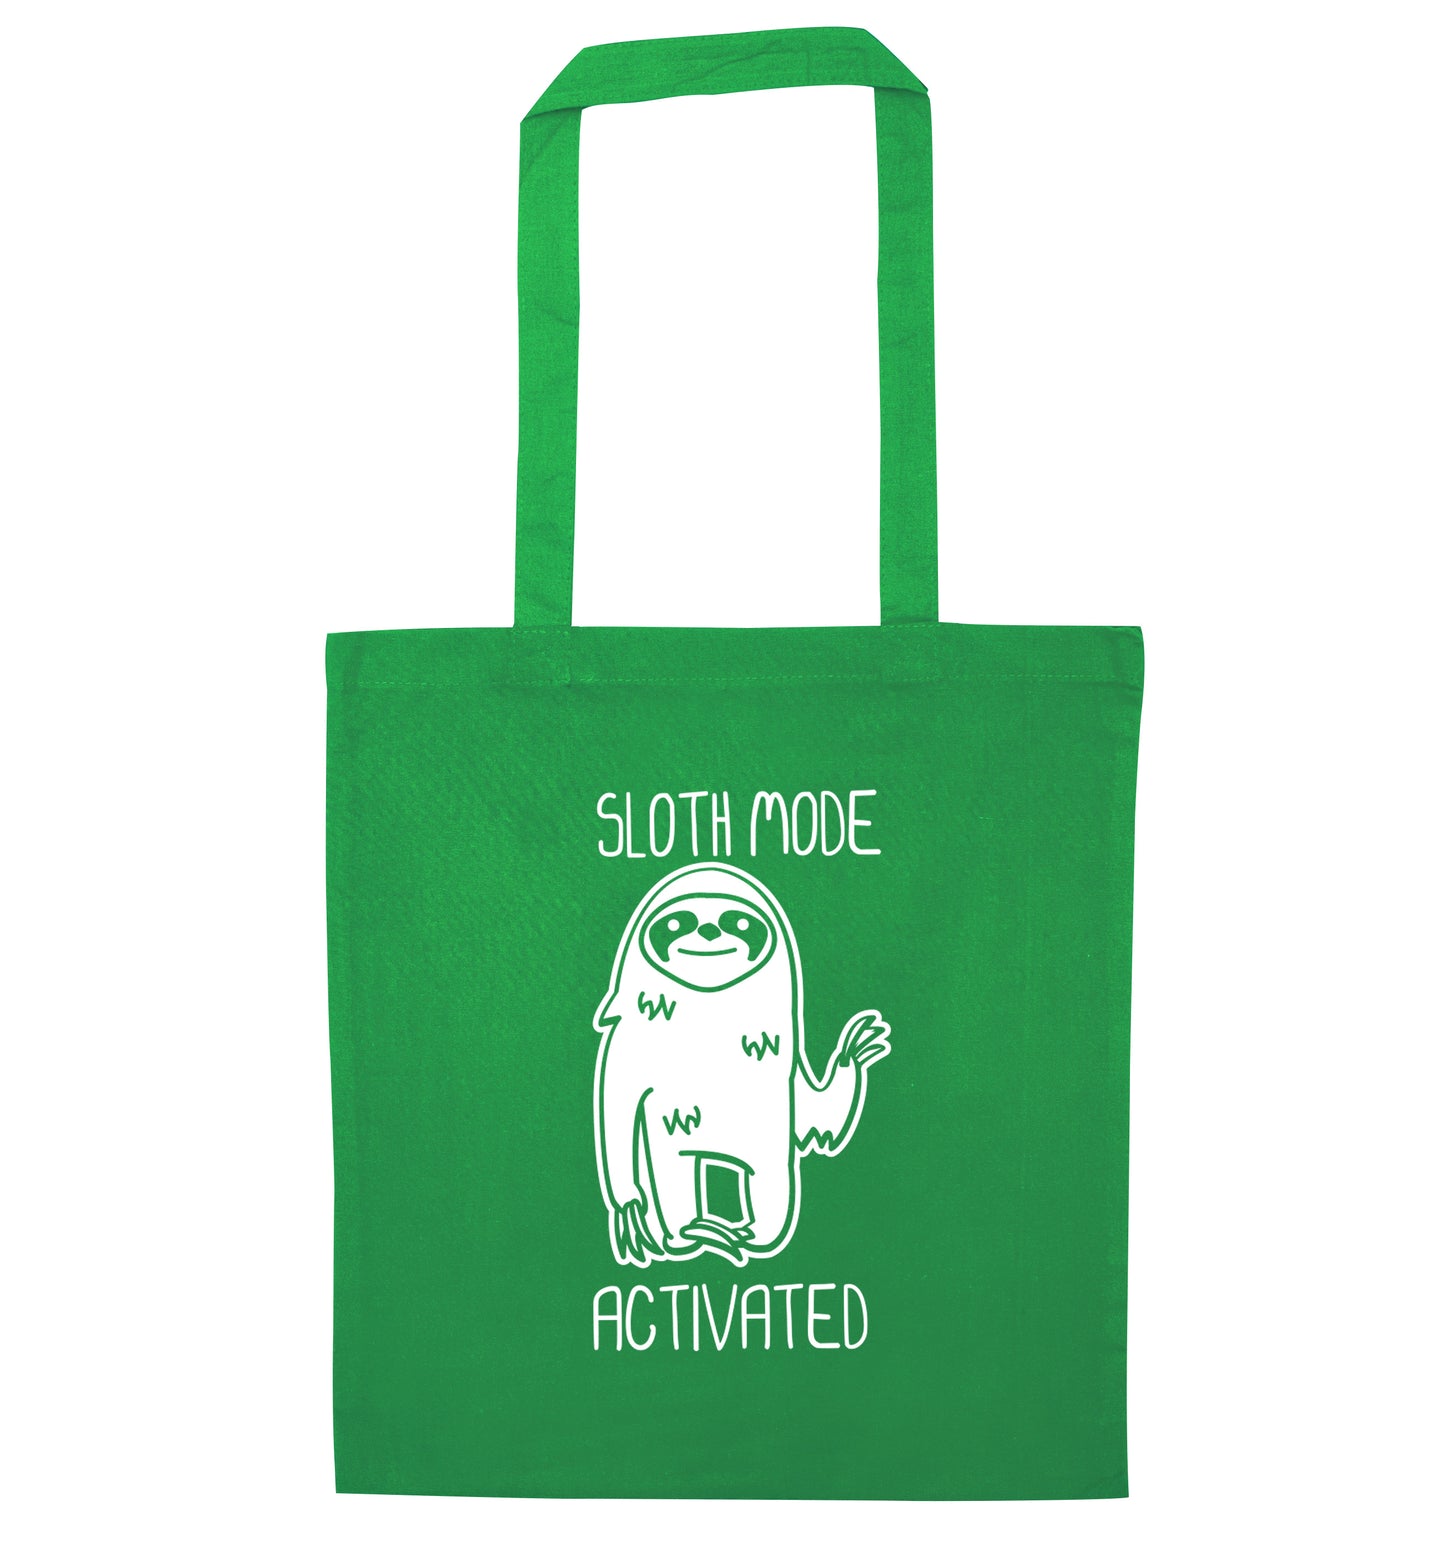 Sloth mode acitvated green tote bag